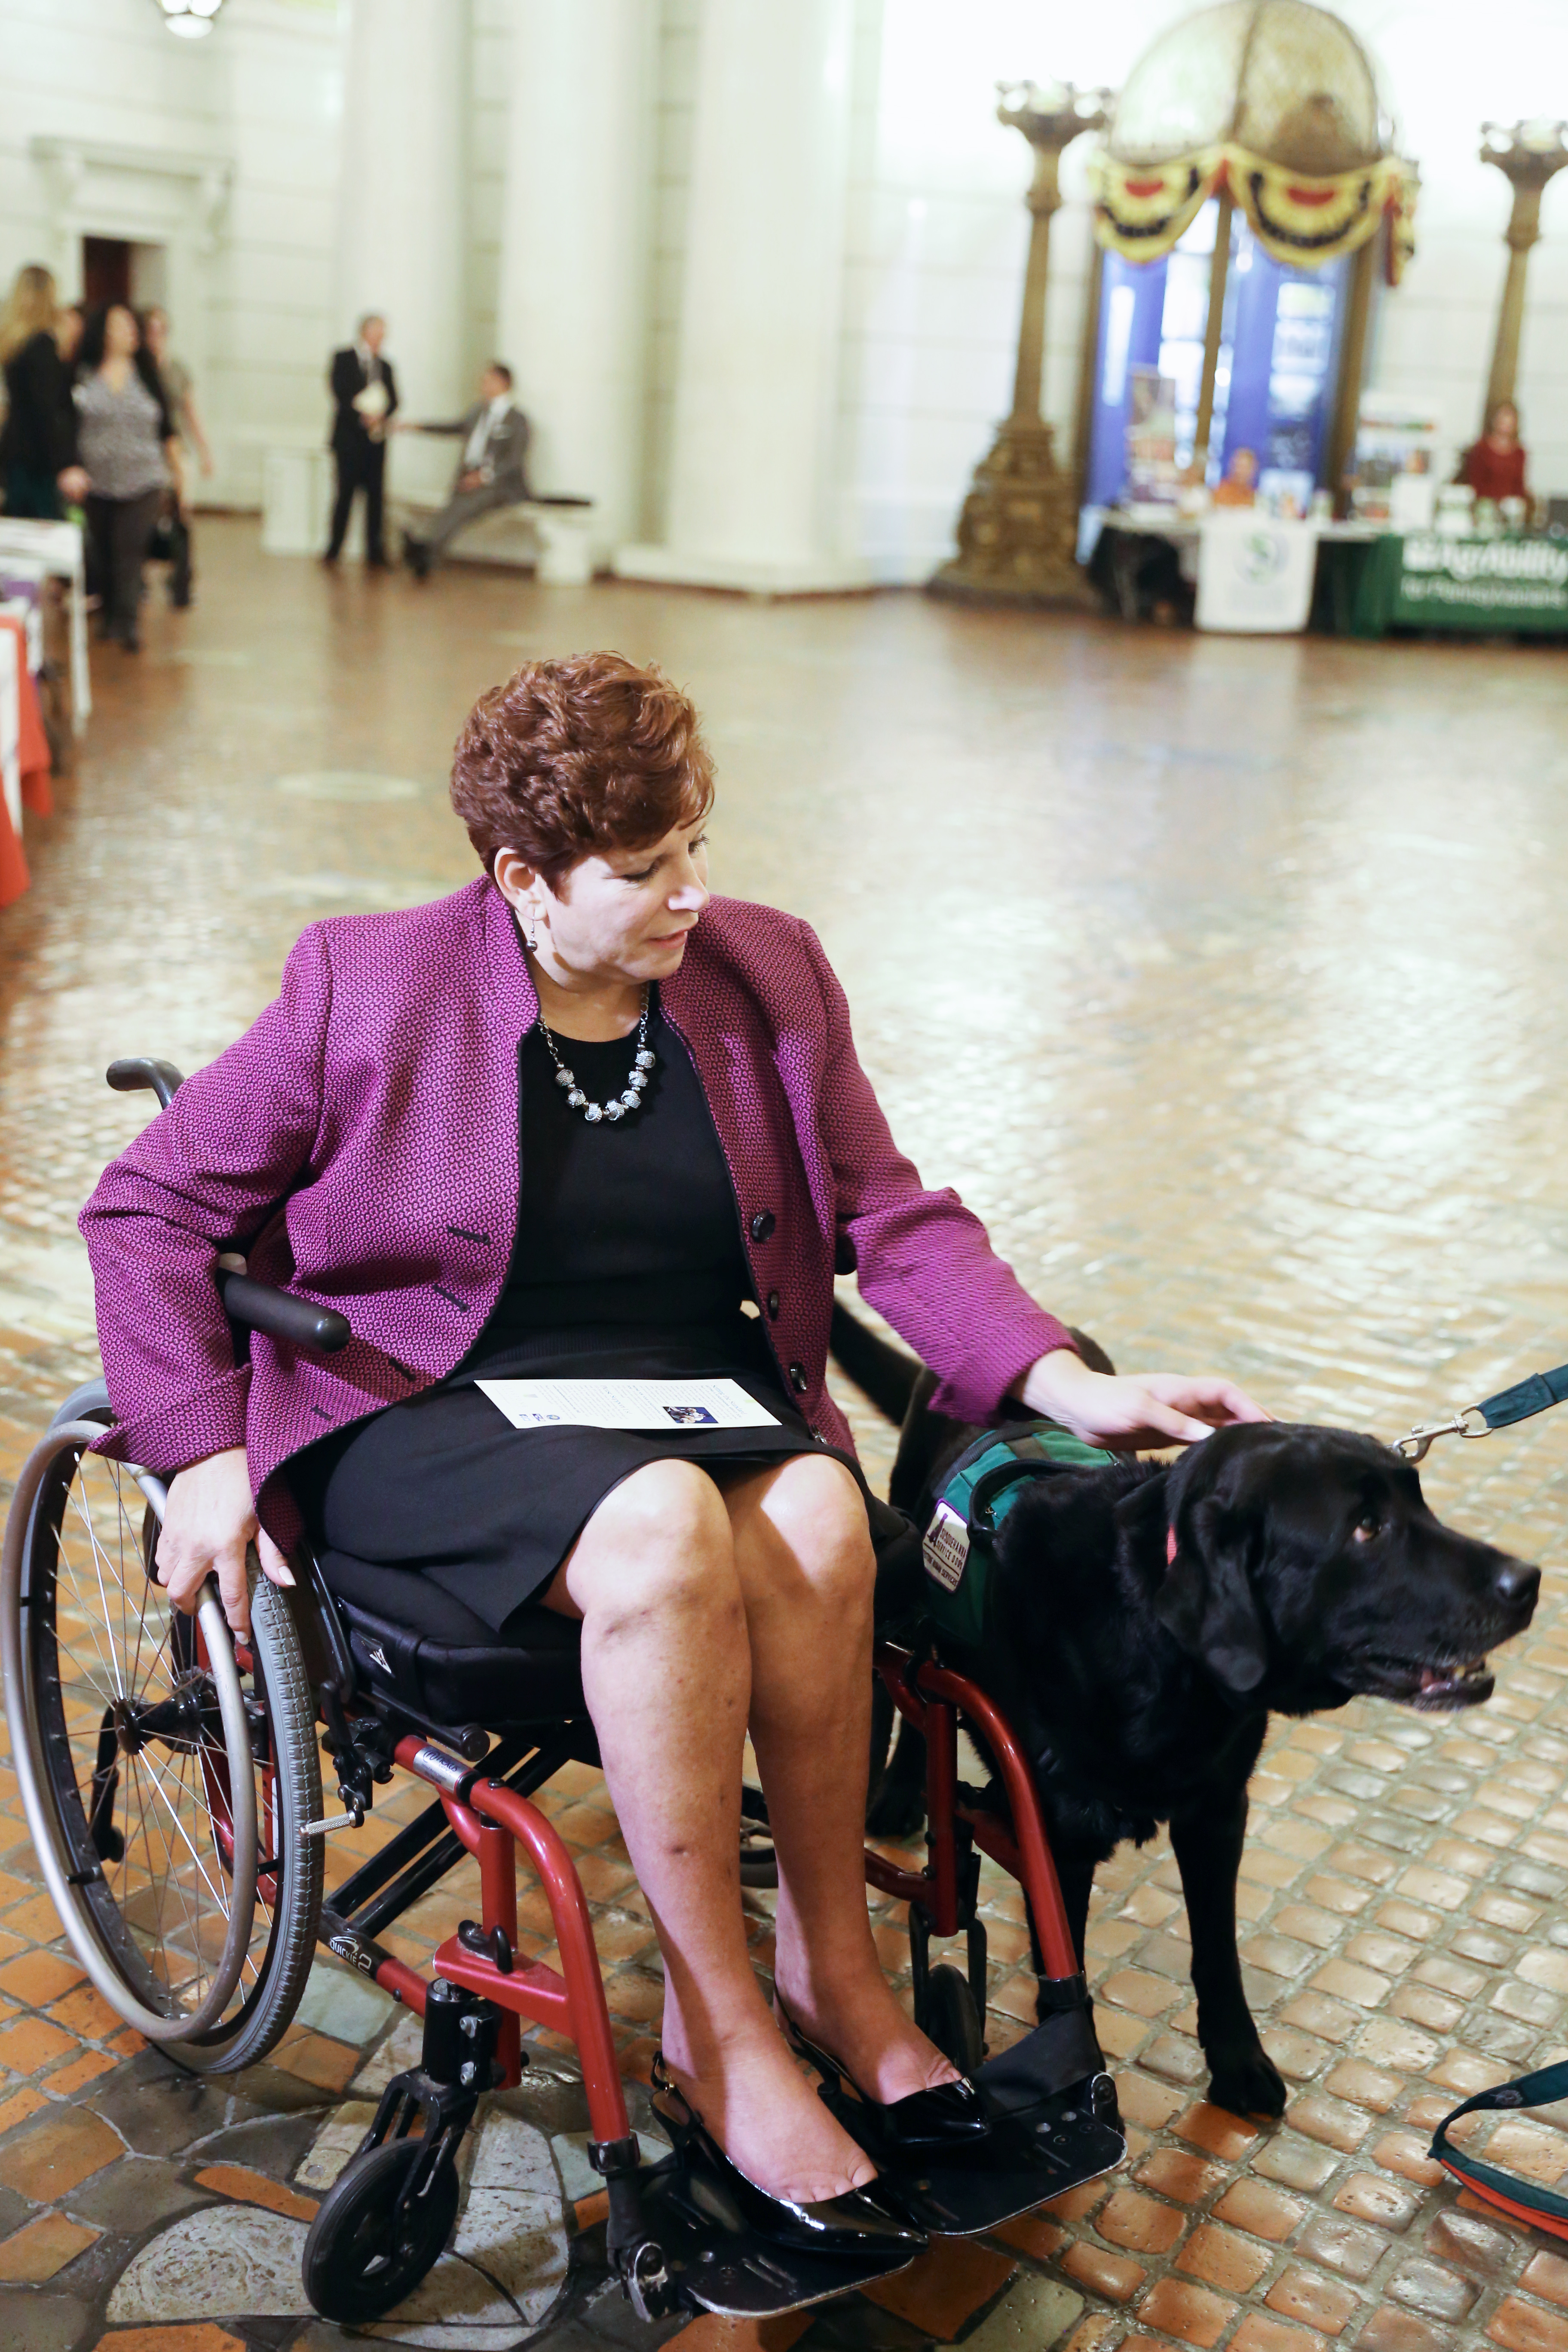 Senator Tartaglione to Host Annual Disability Employment Awareness Day at Pennsylvania Capitol